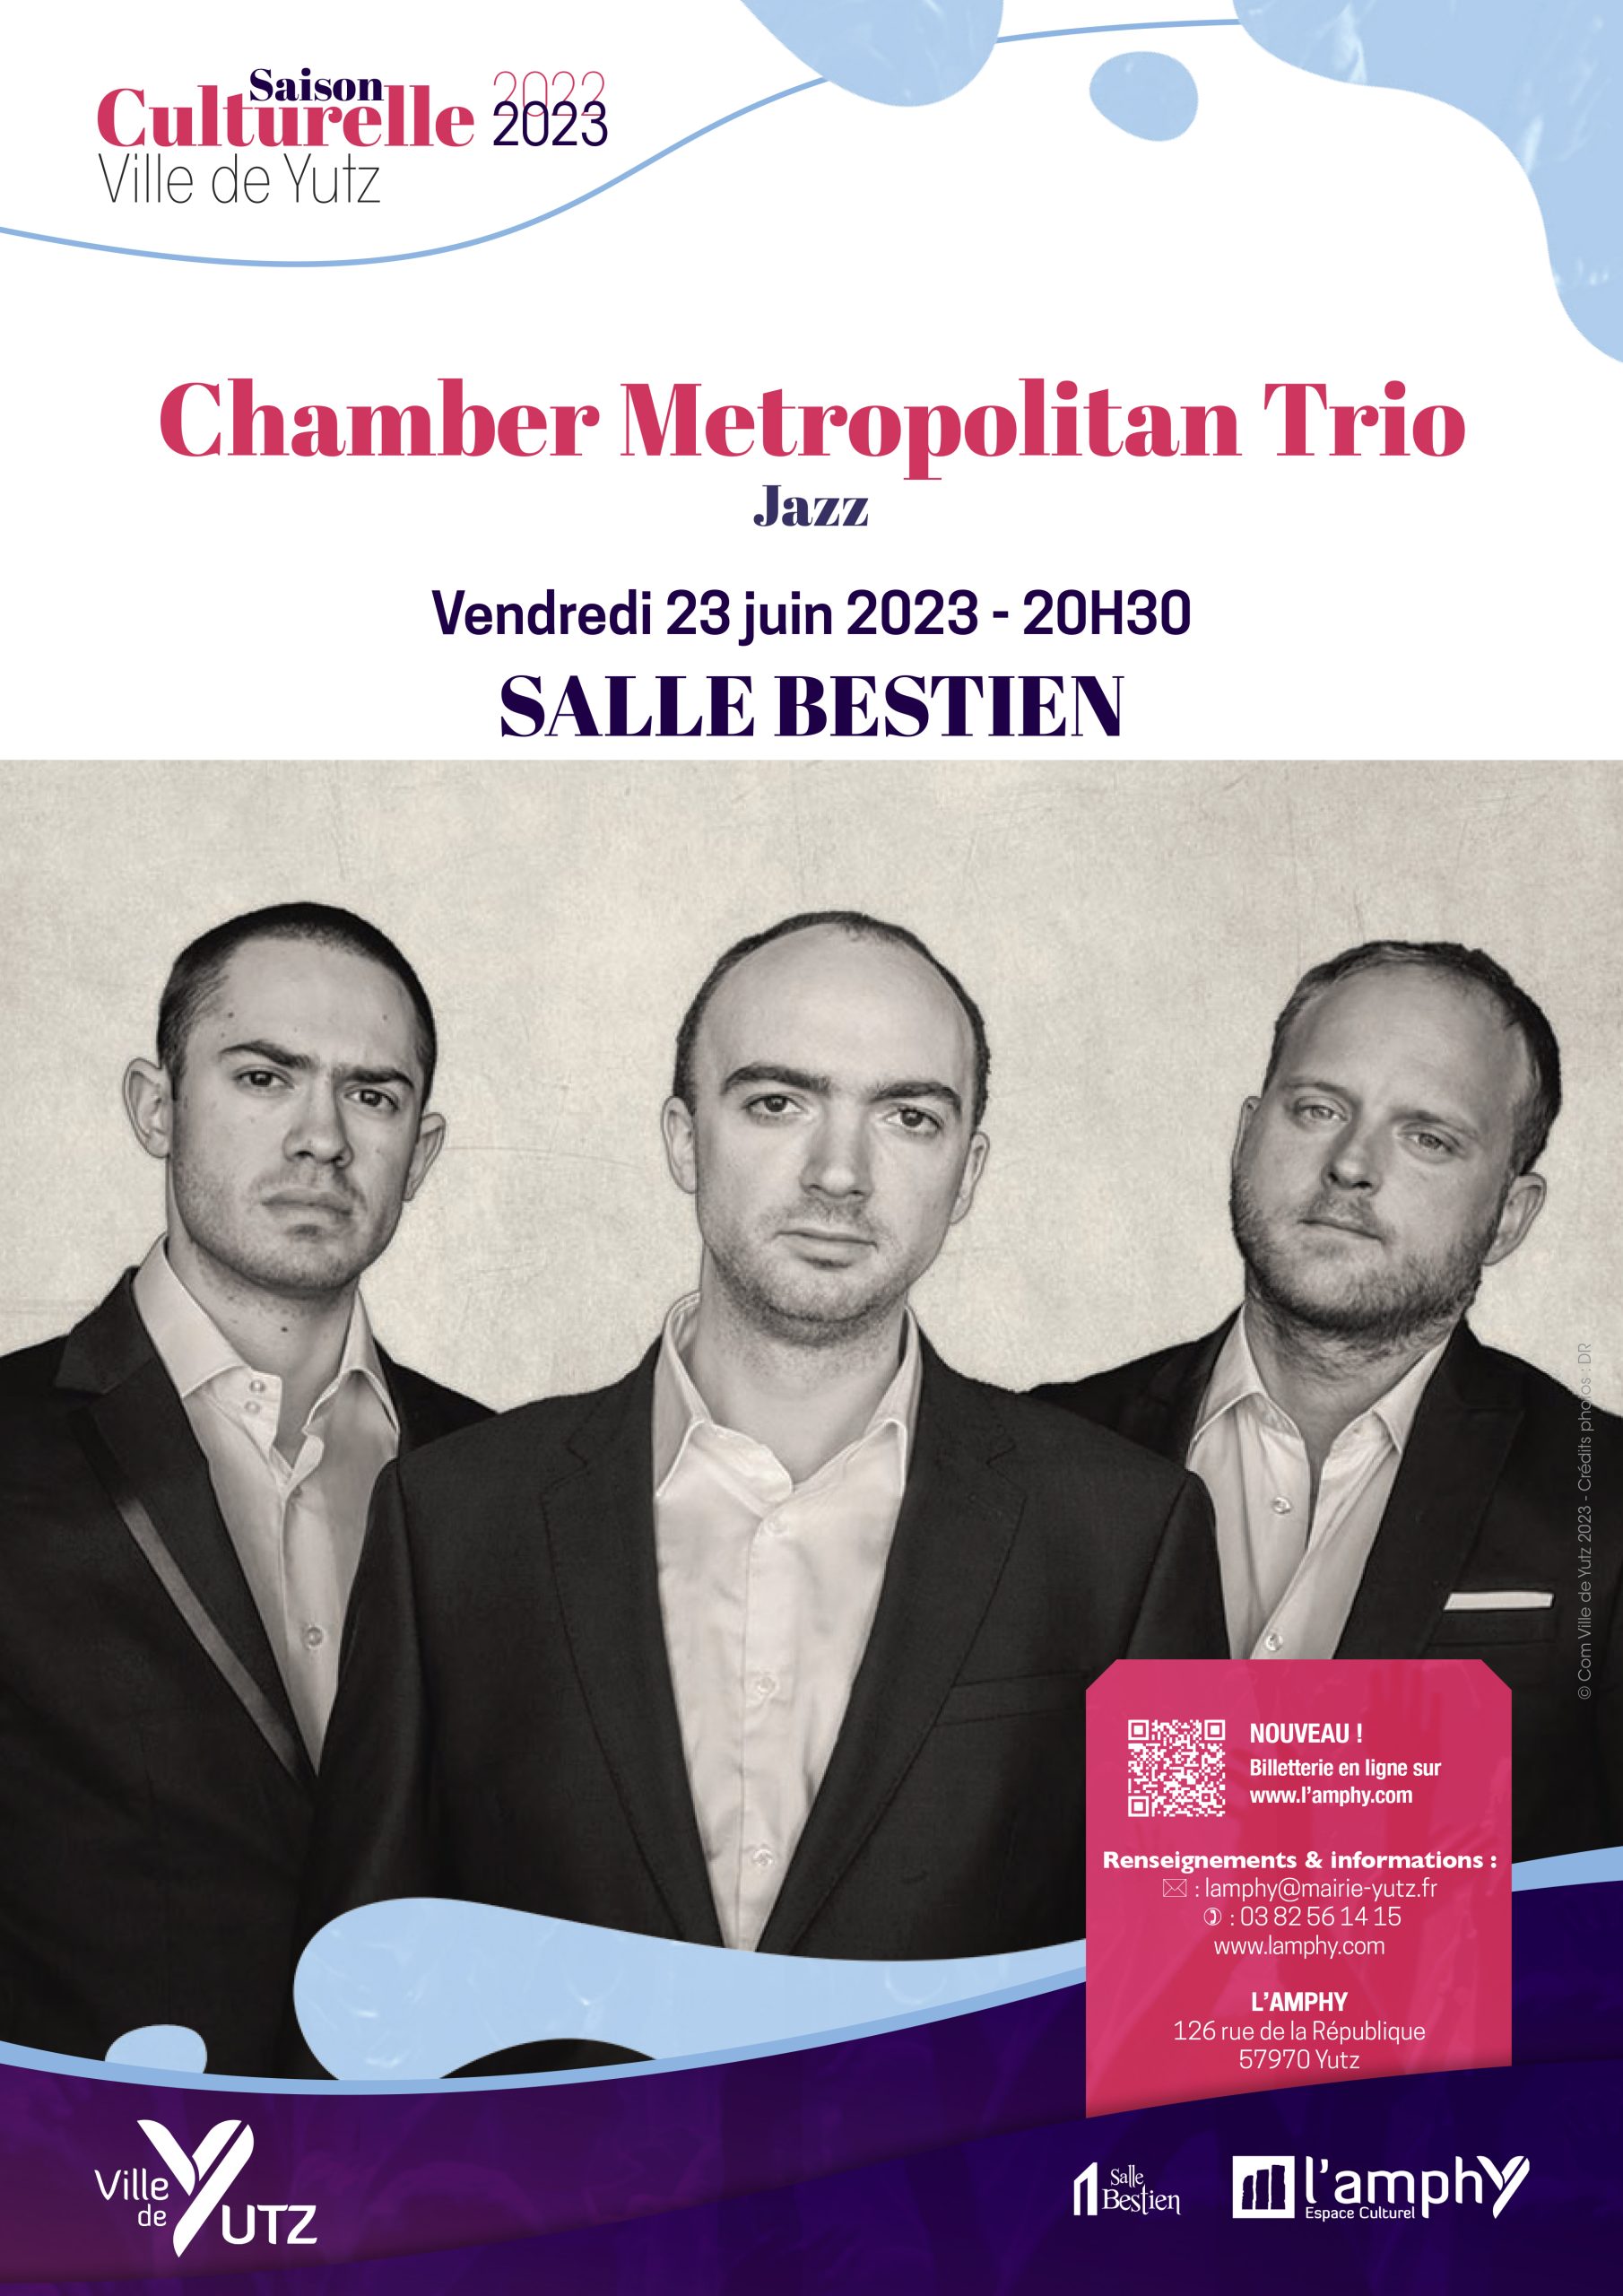 Chamber Metropolitan Trio